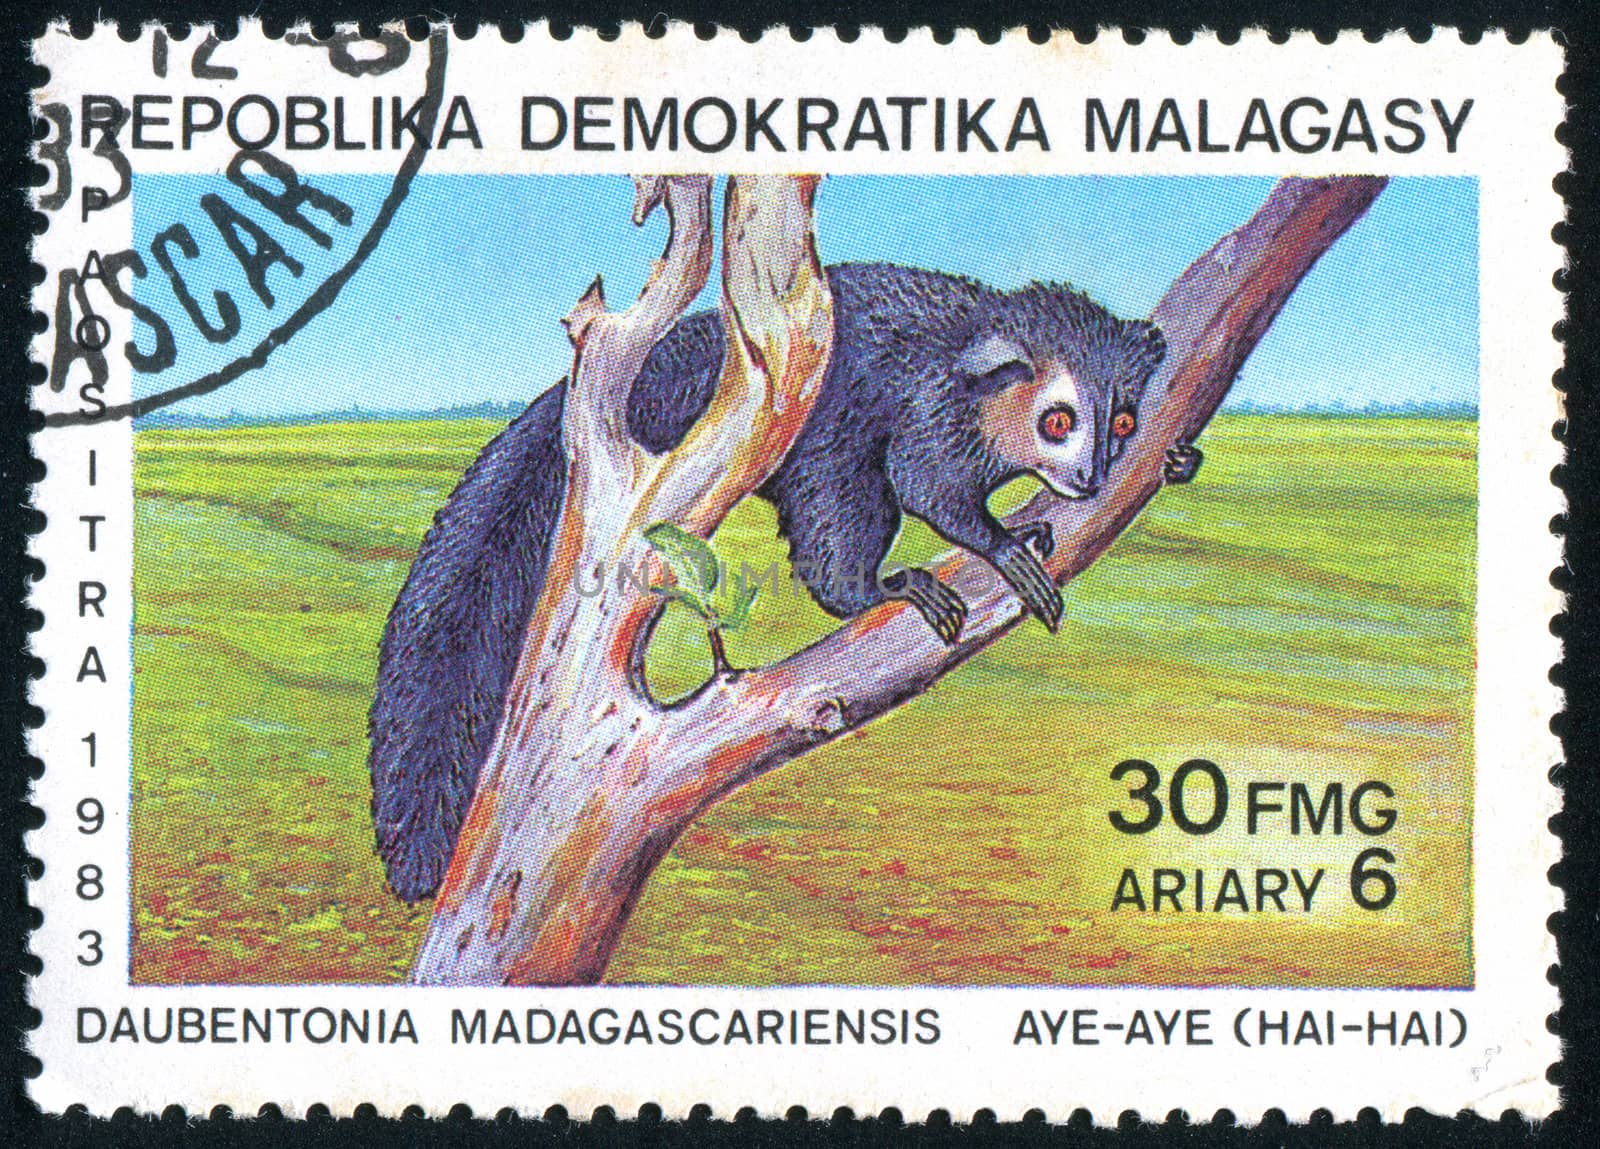 MALAGASY - CIRCA 1983: stamp printed by Malagasy, shows Lemur, circa 1983.